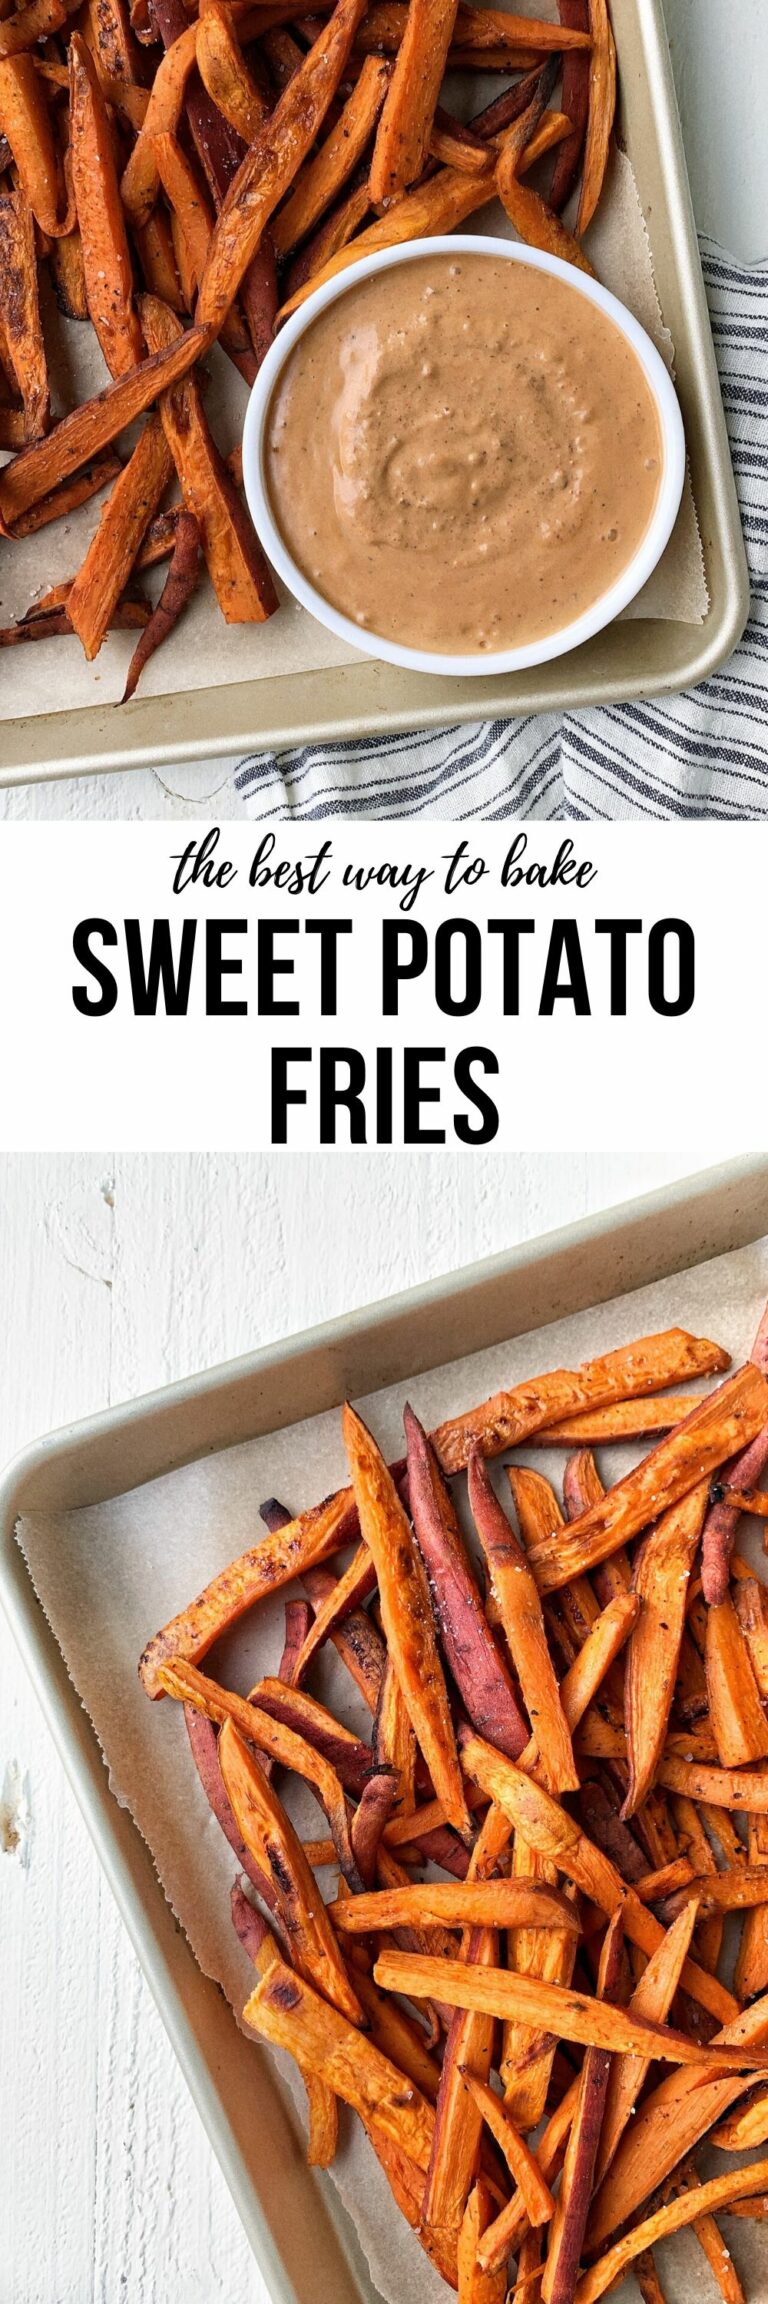 Sweet Potato Fries 768x2304 